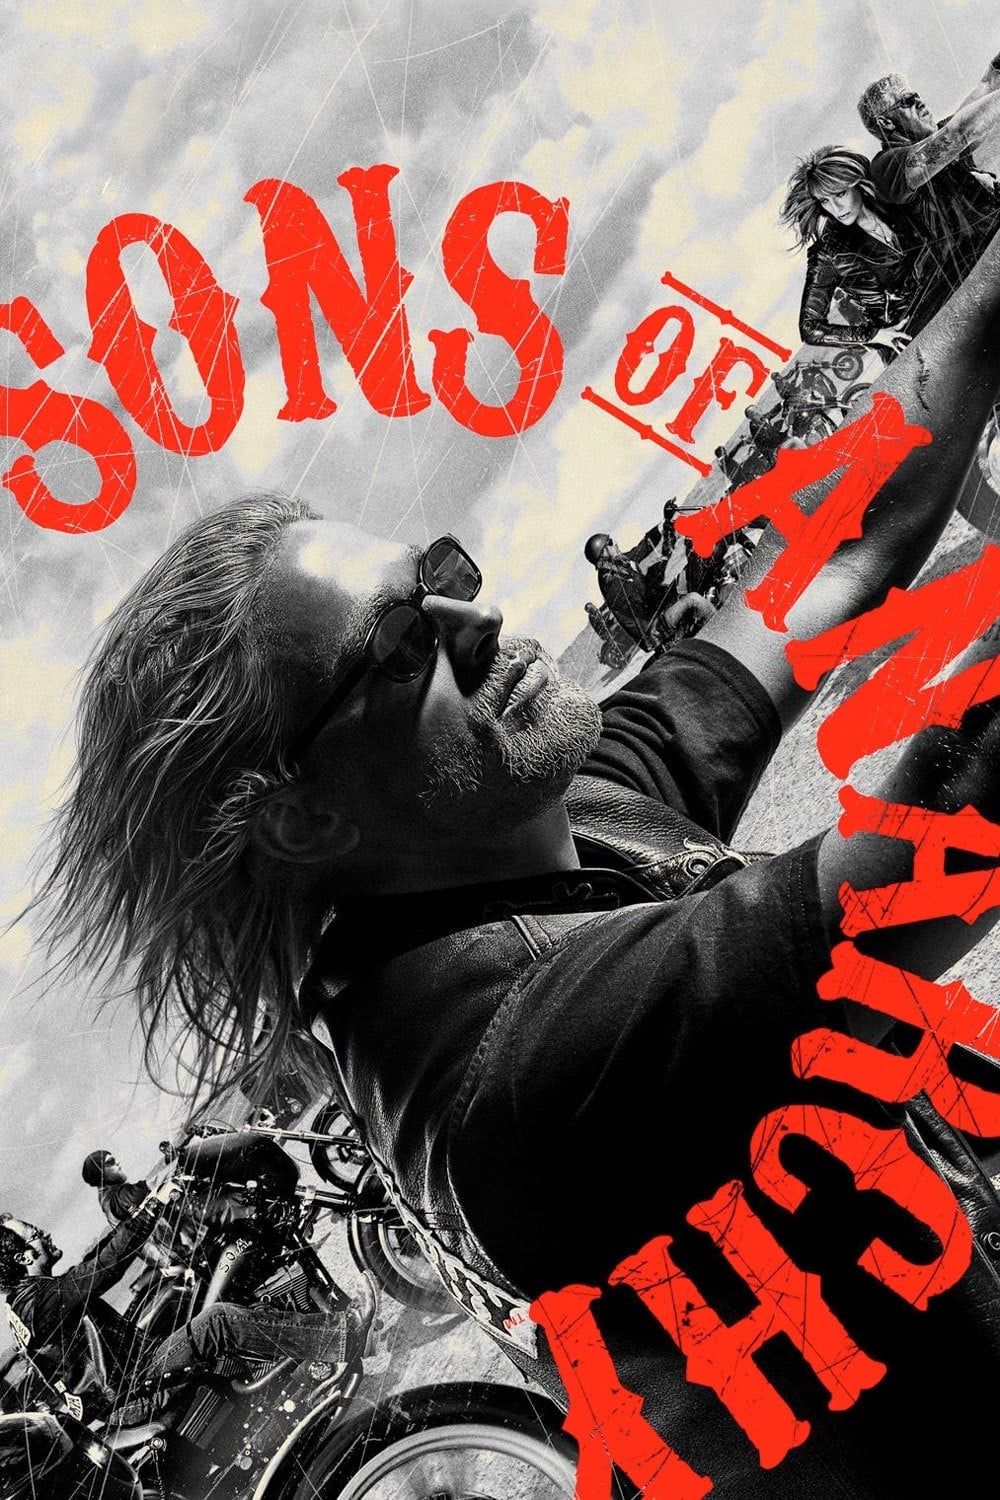 Sons of Anarchy (2008 - 2014) Seizoen 5 Disc 2 BD50